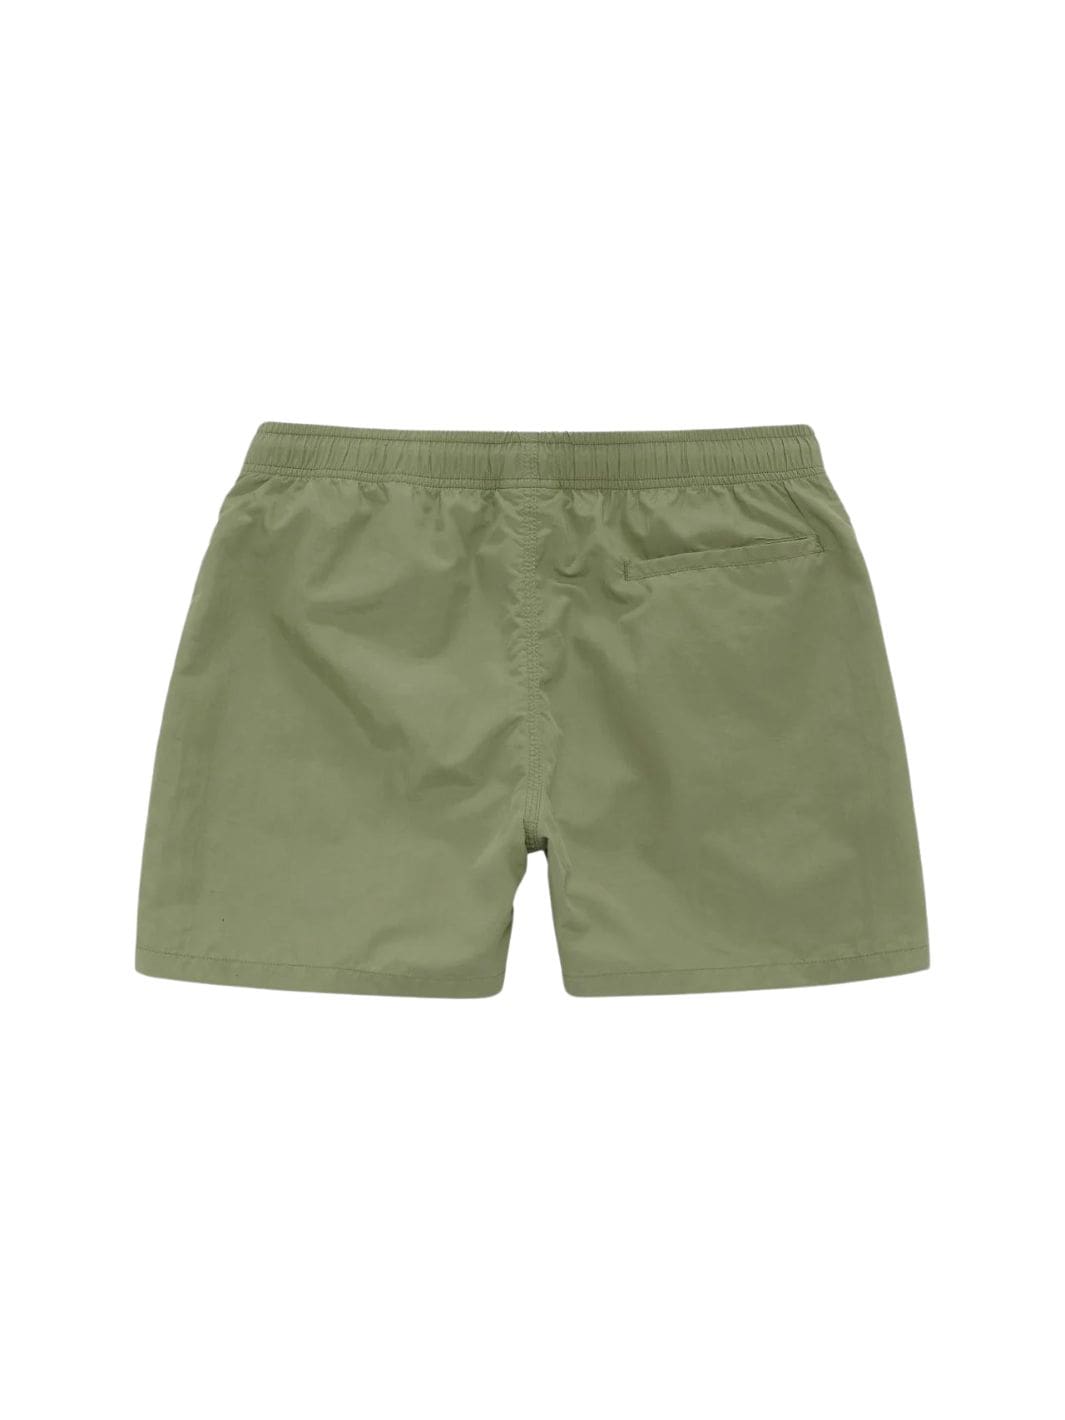 Oas Shorts Badeshorts | Nylon Swim Shorts Green